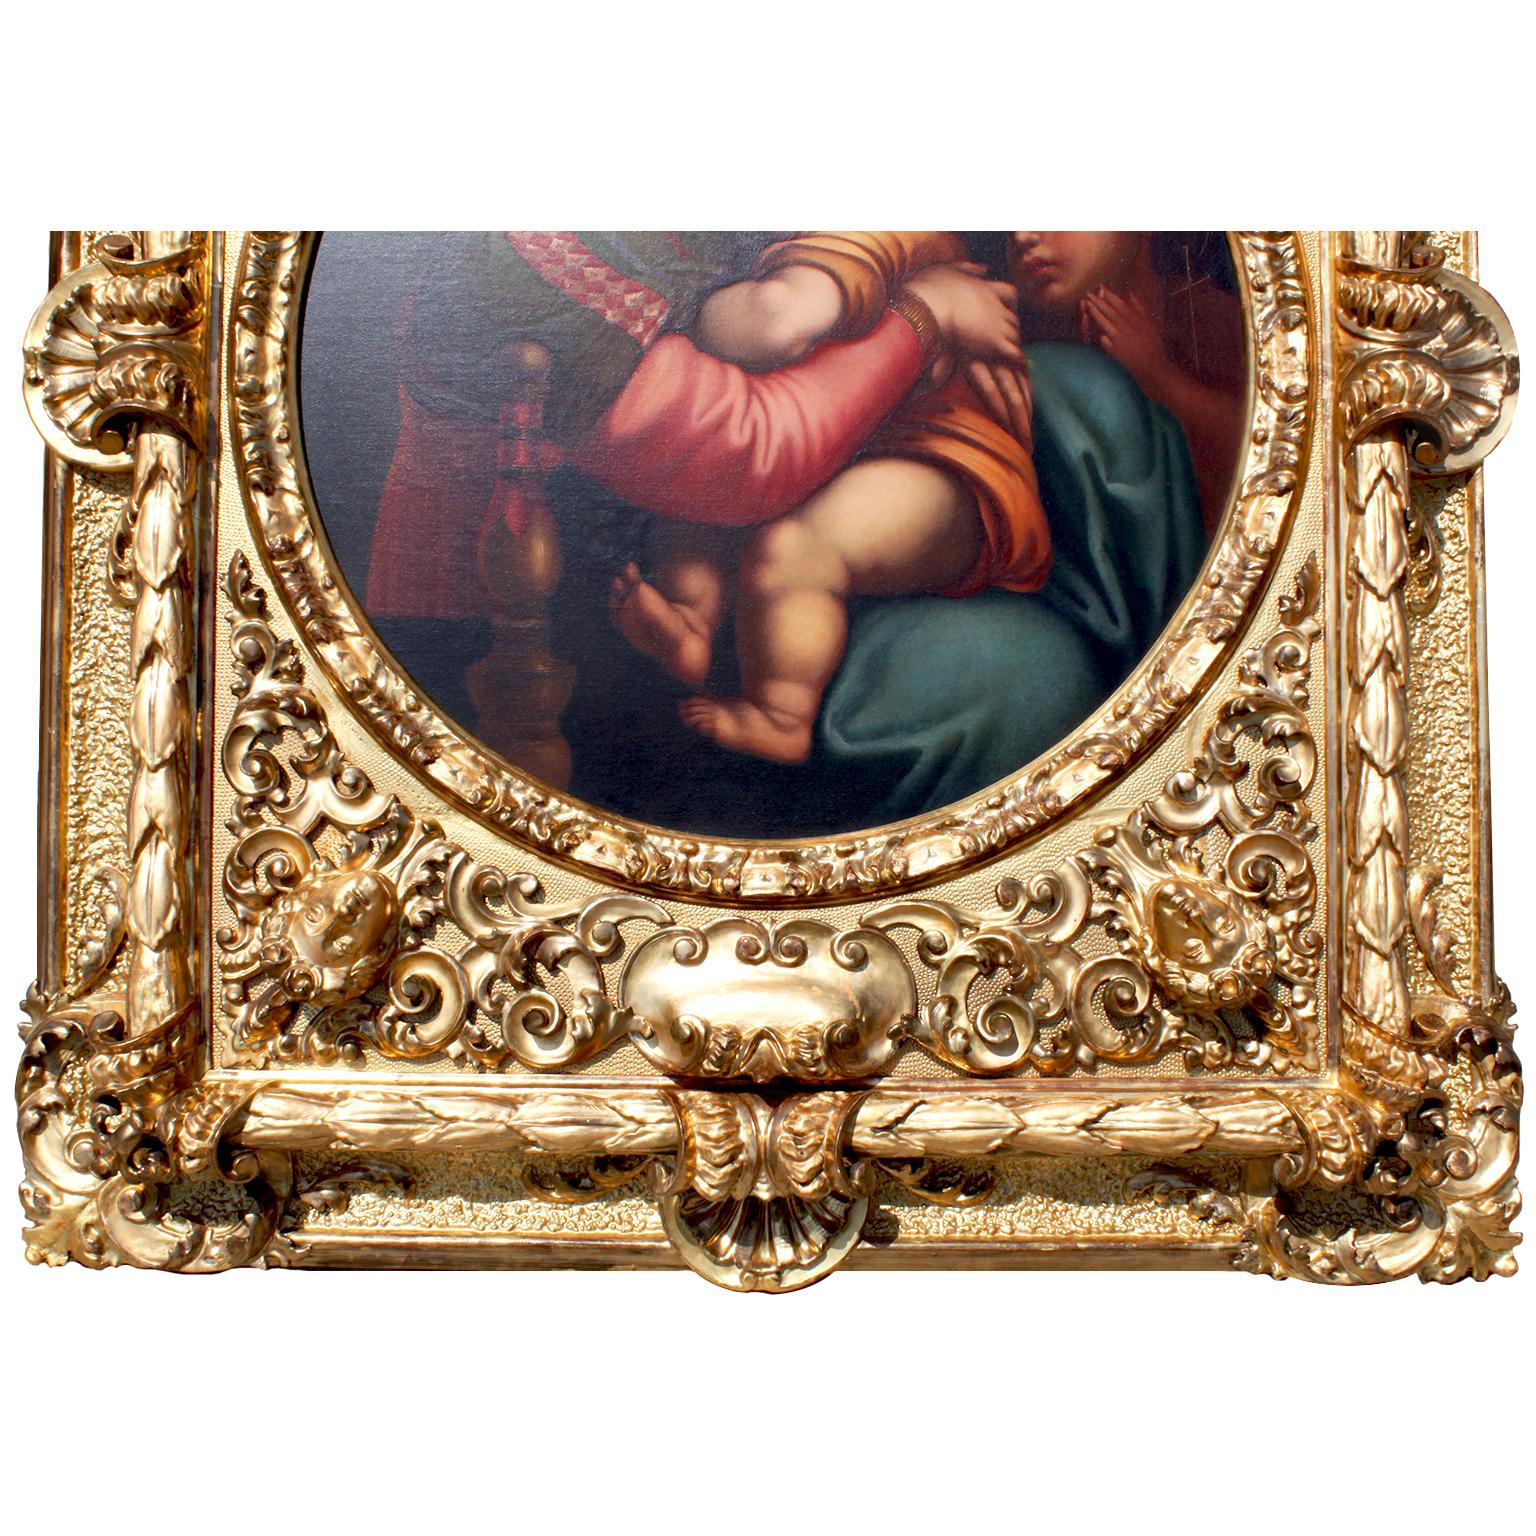 Nach Raffaello Sanzio 1483-1520 Raphael La Madonna della Seggiola, Öl auf Leinwand (Vergoldet) im Angebot